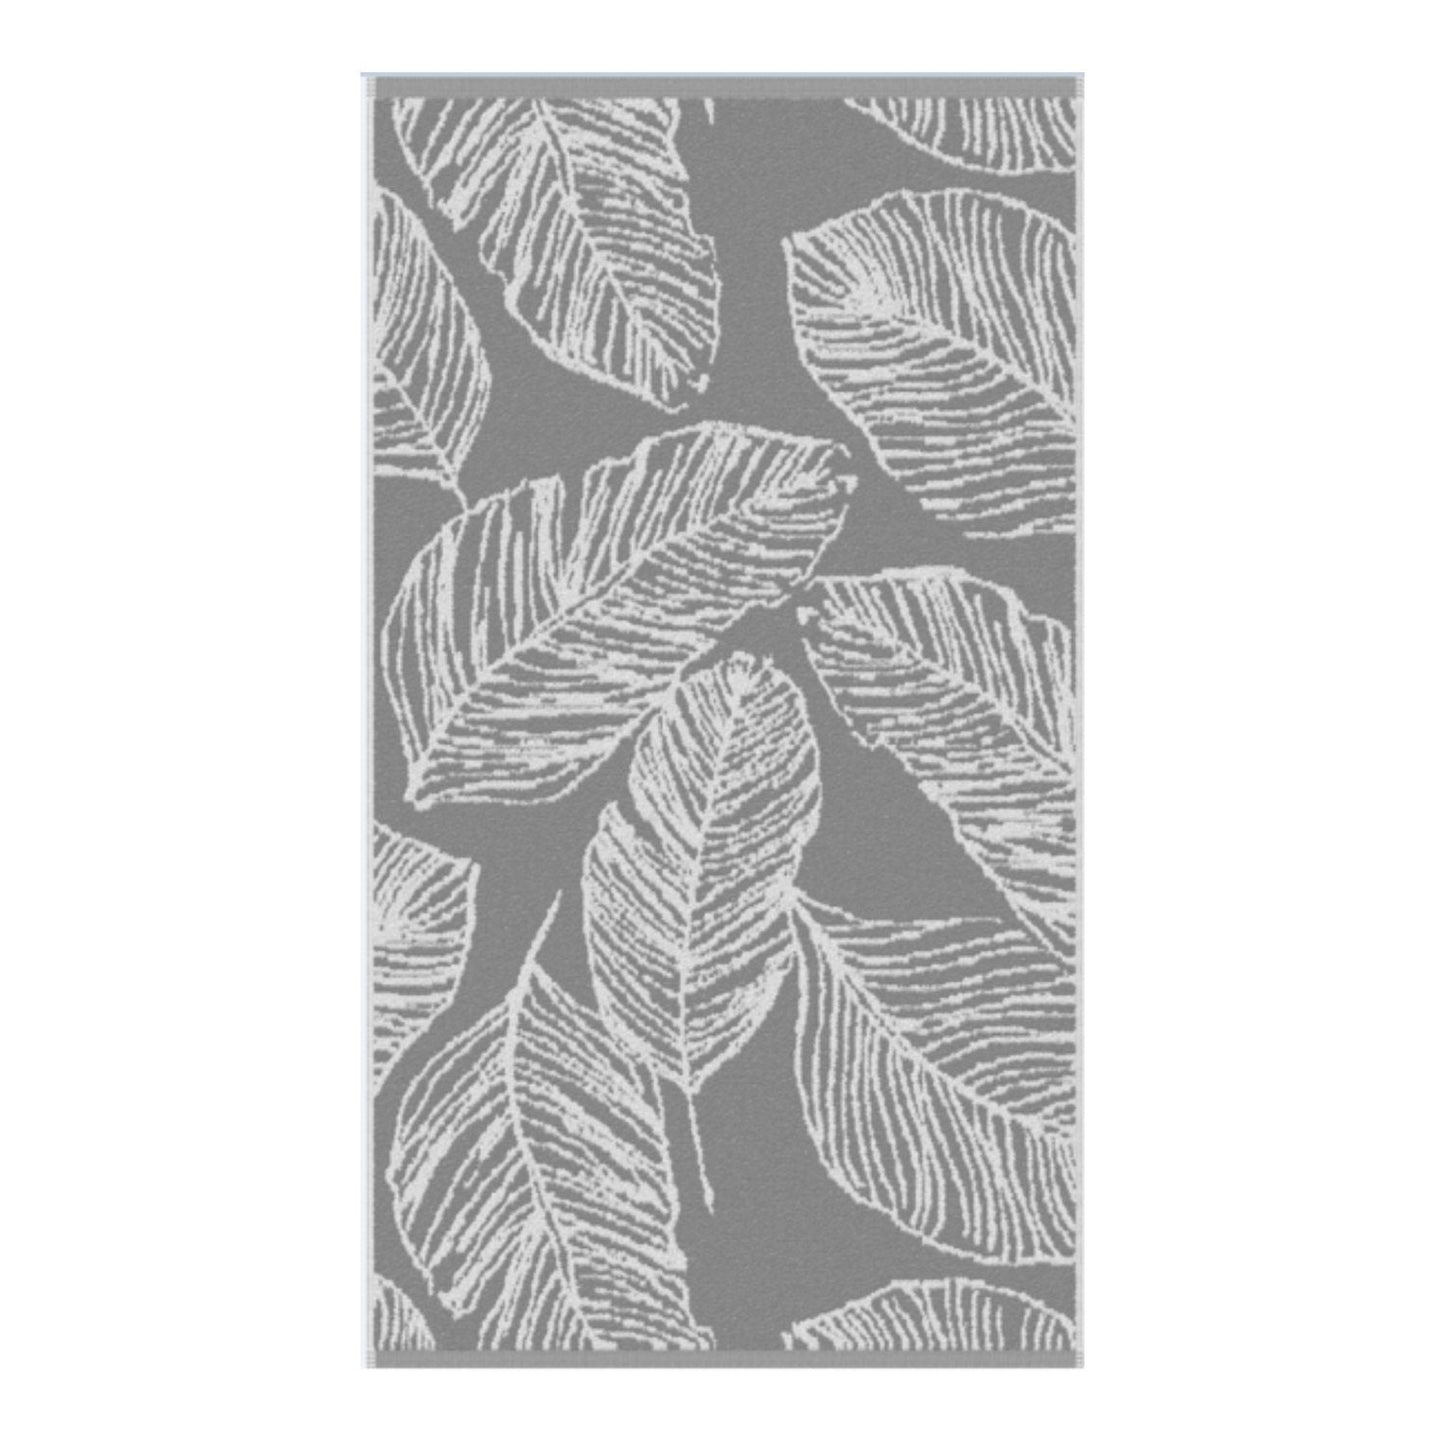 Matteo Grey Leaf Print 550gsm Cotton Towels